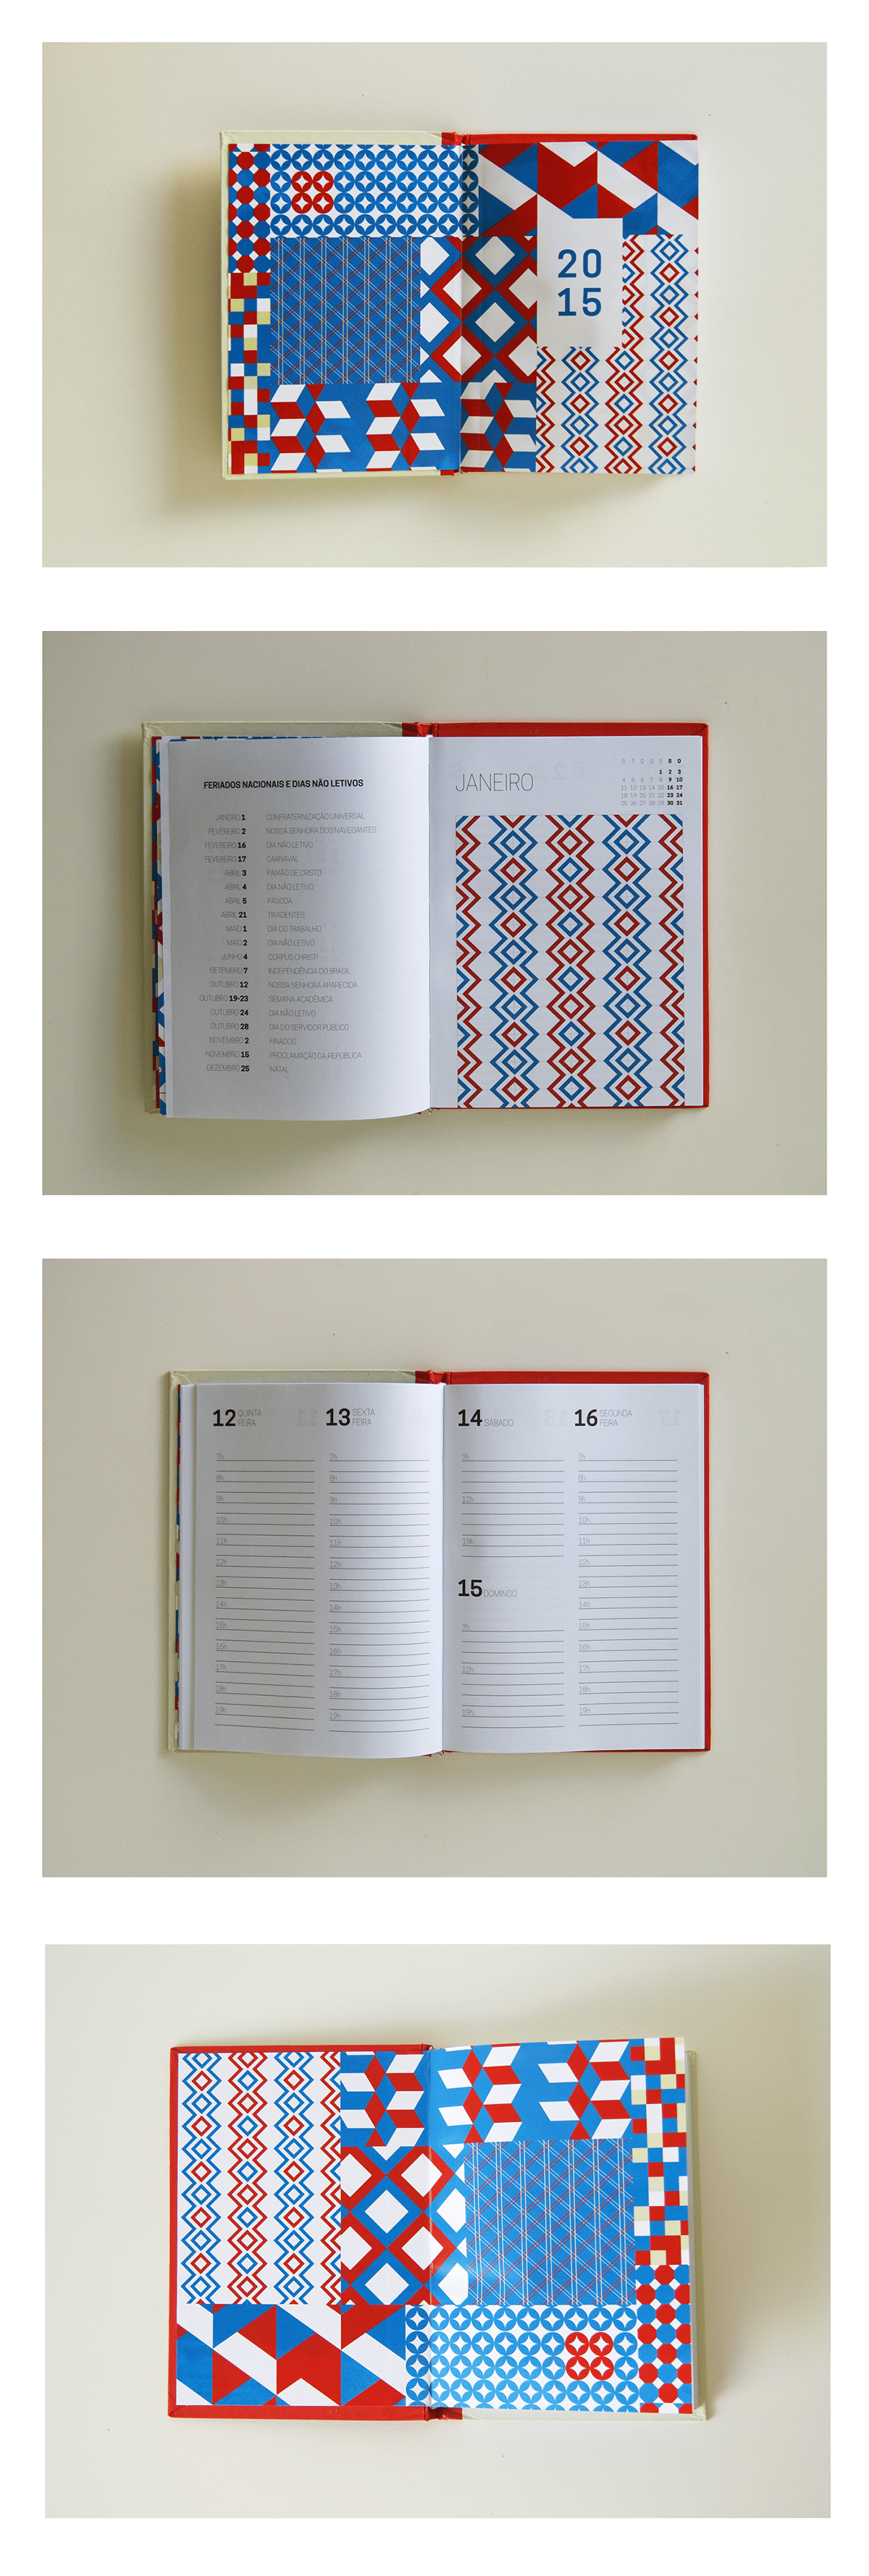 agenda calendar ufrgs year 2015 month pattern personal organizer